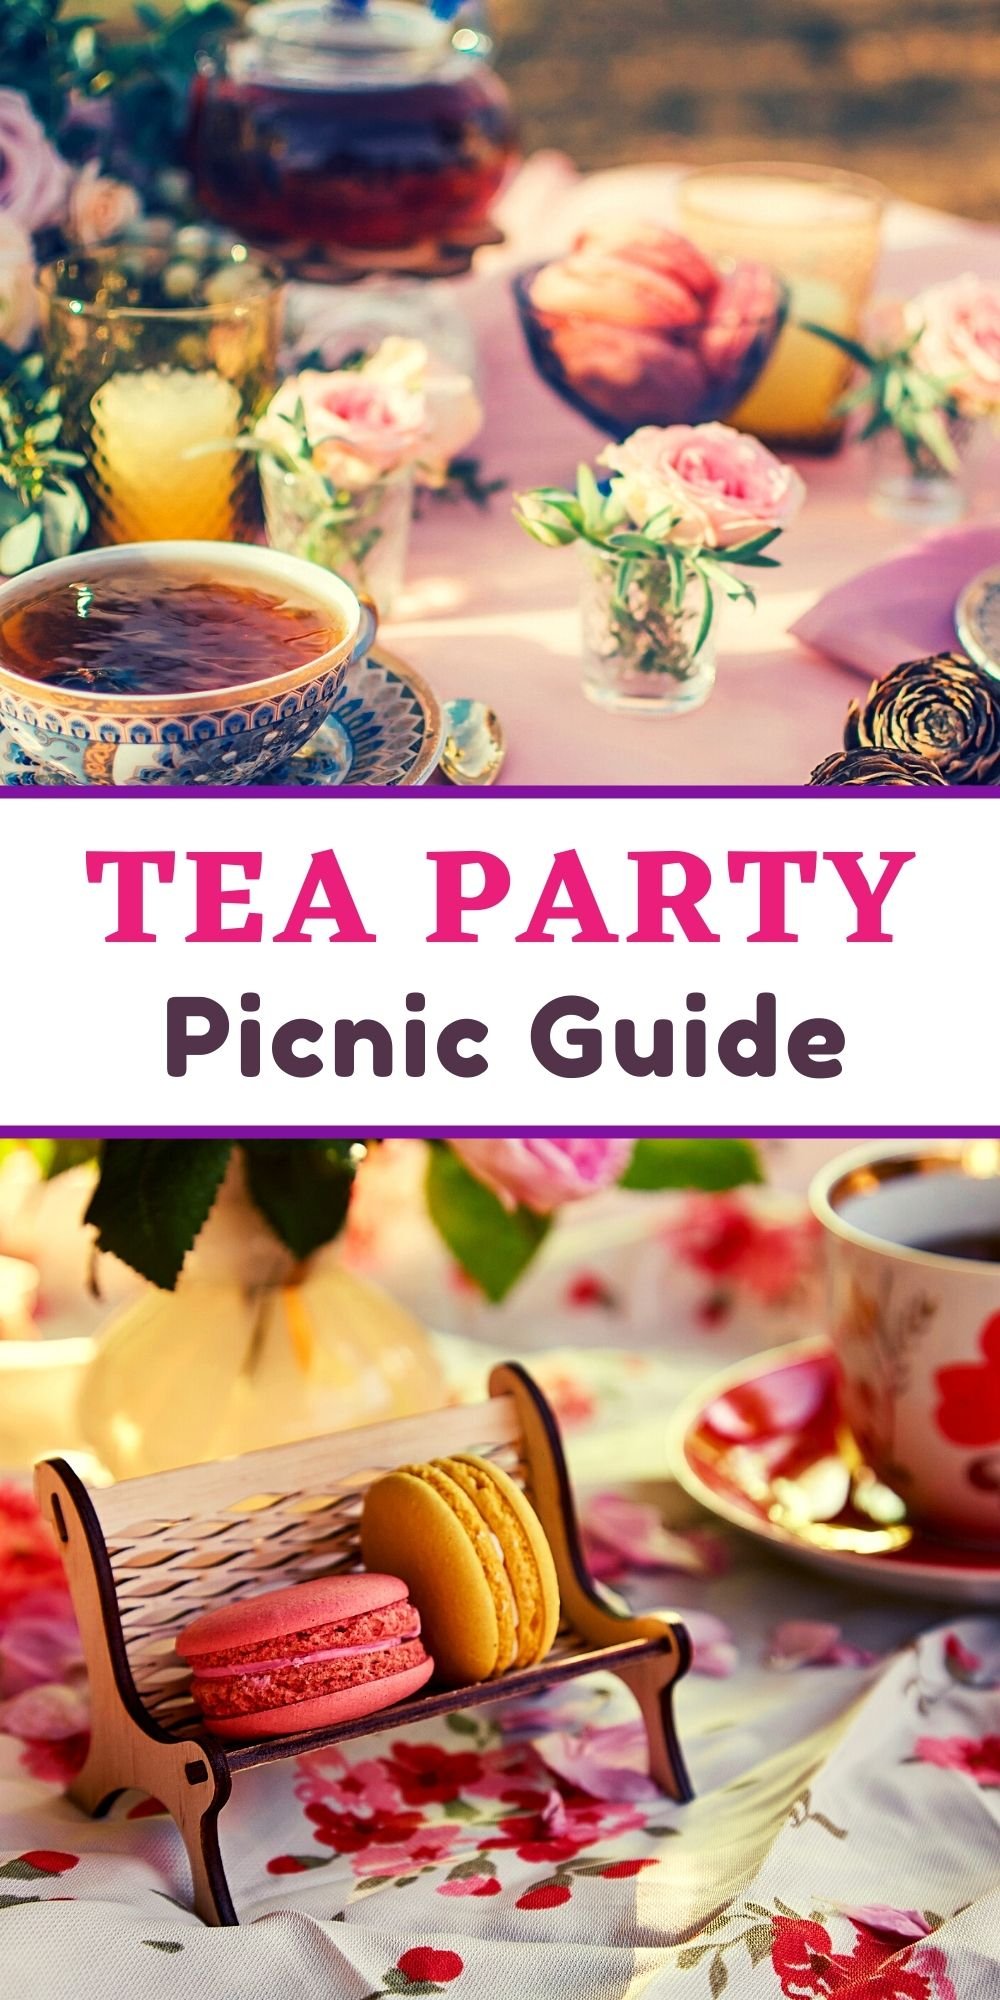 Tea Party Picnic